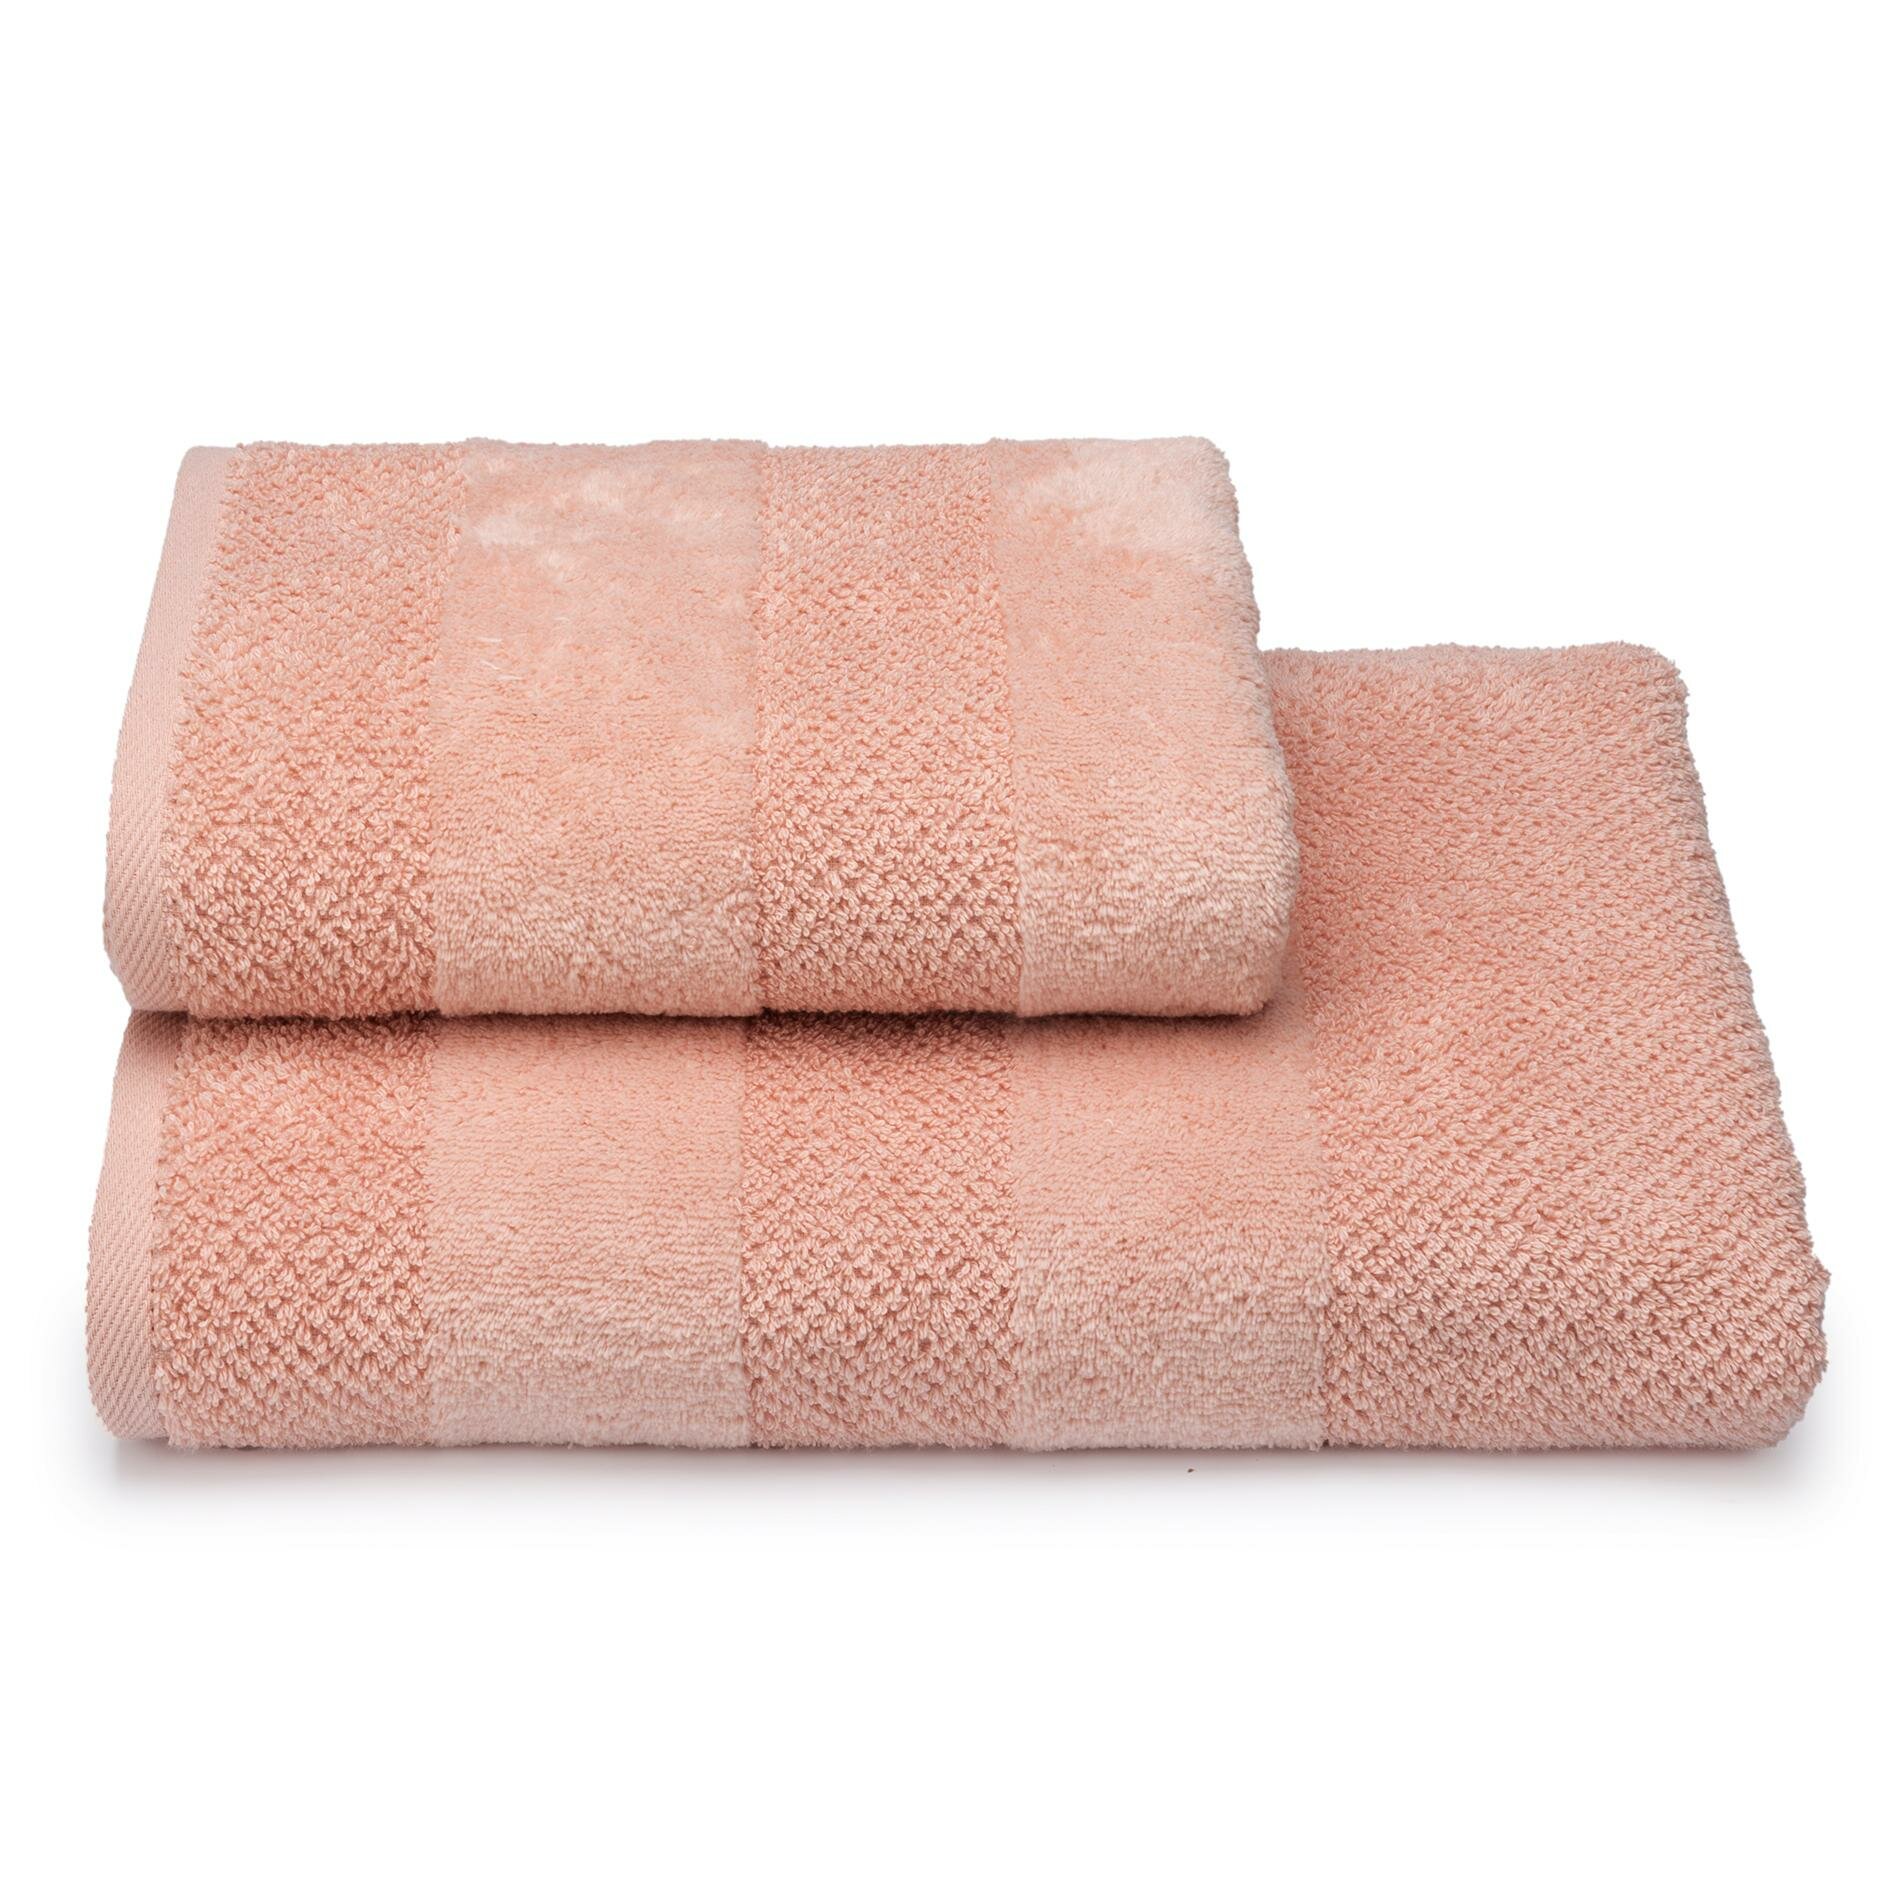 Полотенце махровое 50х90 см для ванной, лица и рук, Cleanelly Heat цвет персиковый, 1 штука